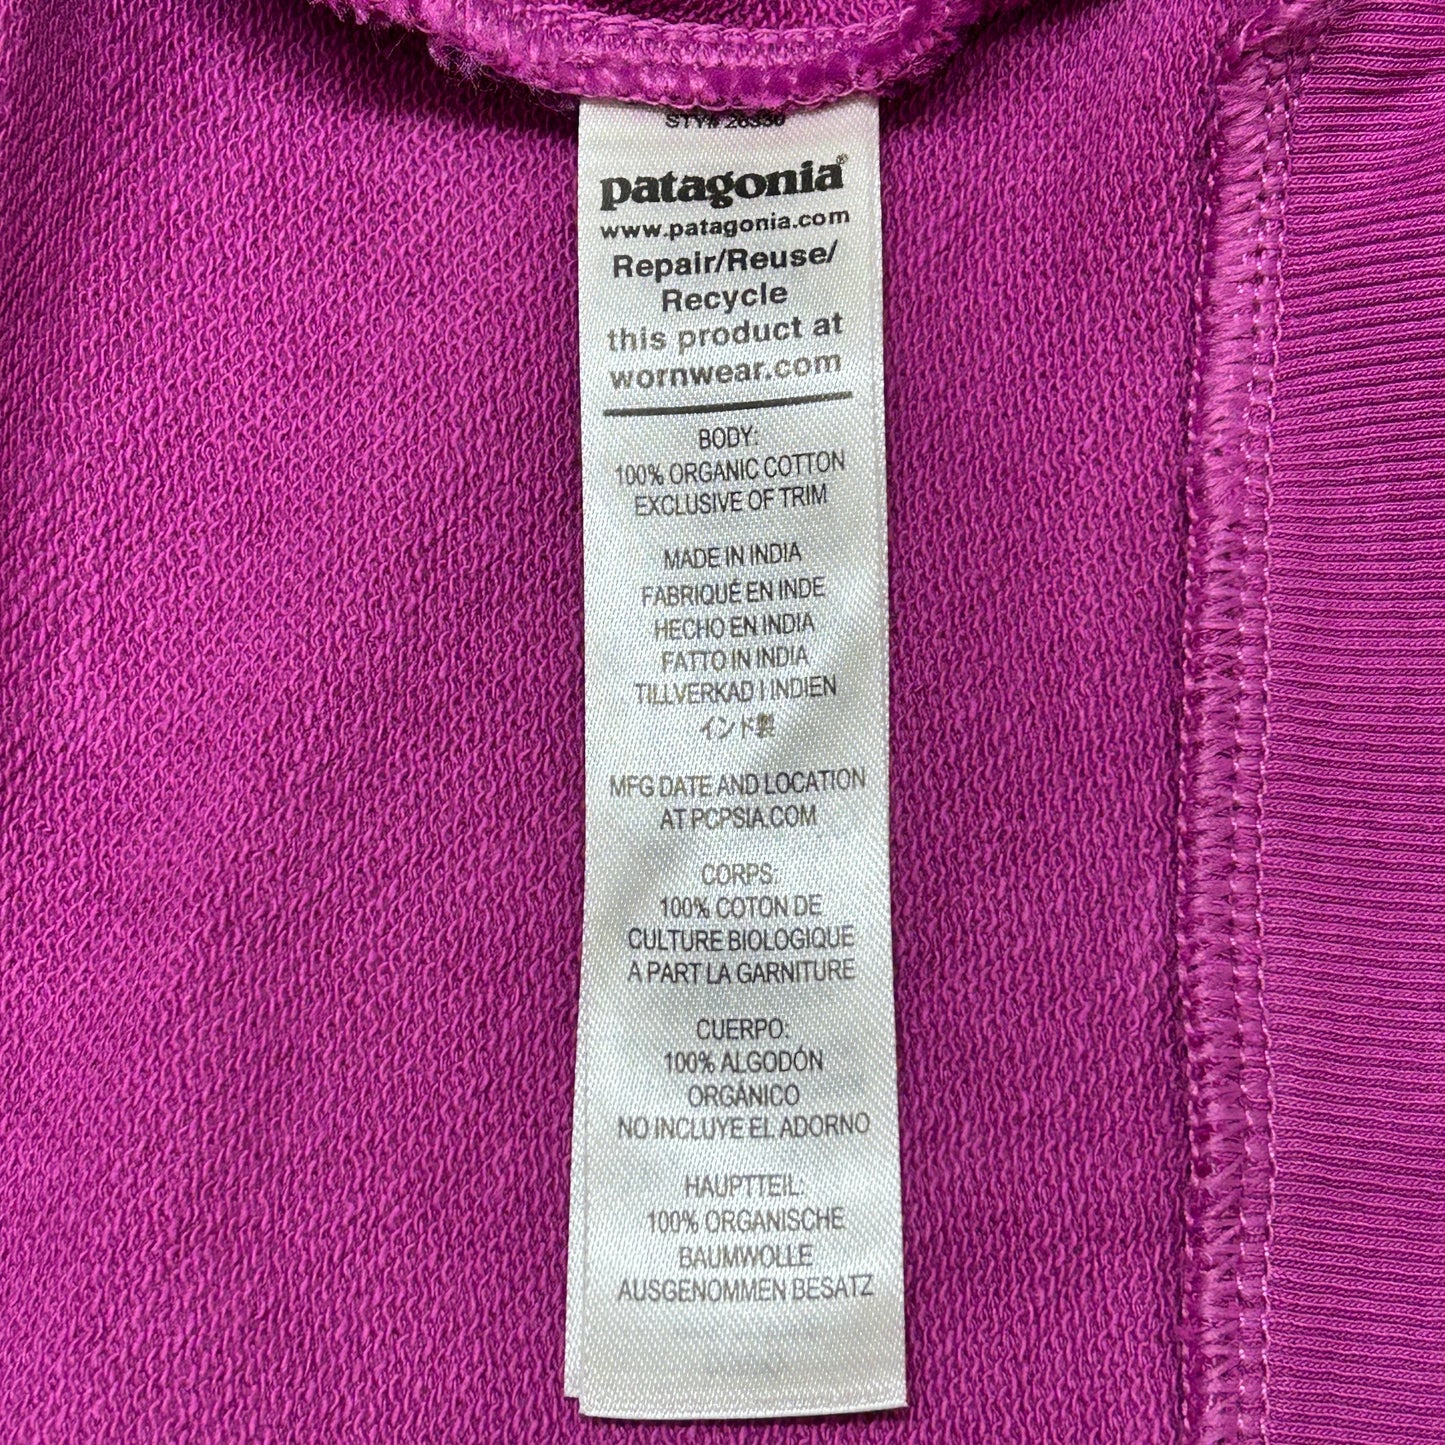 PATAGONIA Regenerative Organic Cotton Hoody Sweatshirt Sz L Amaranth Pink (New)